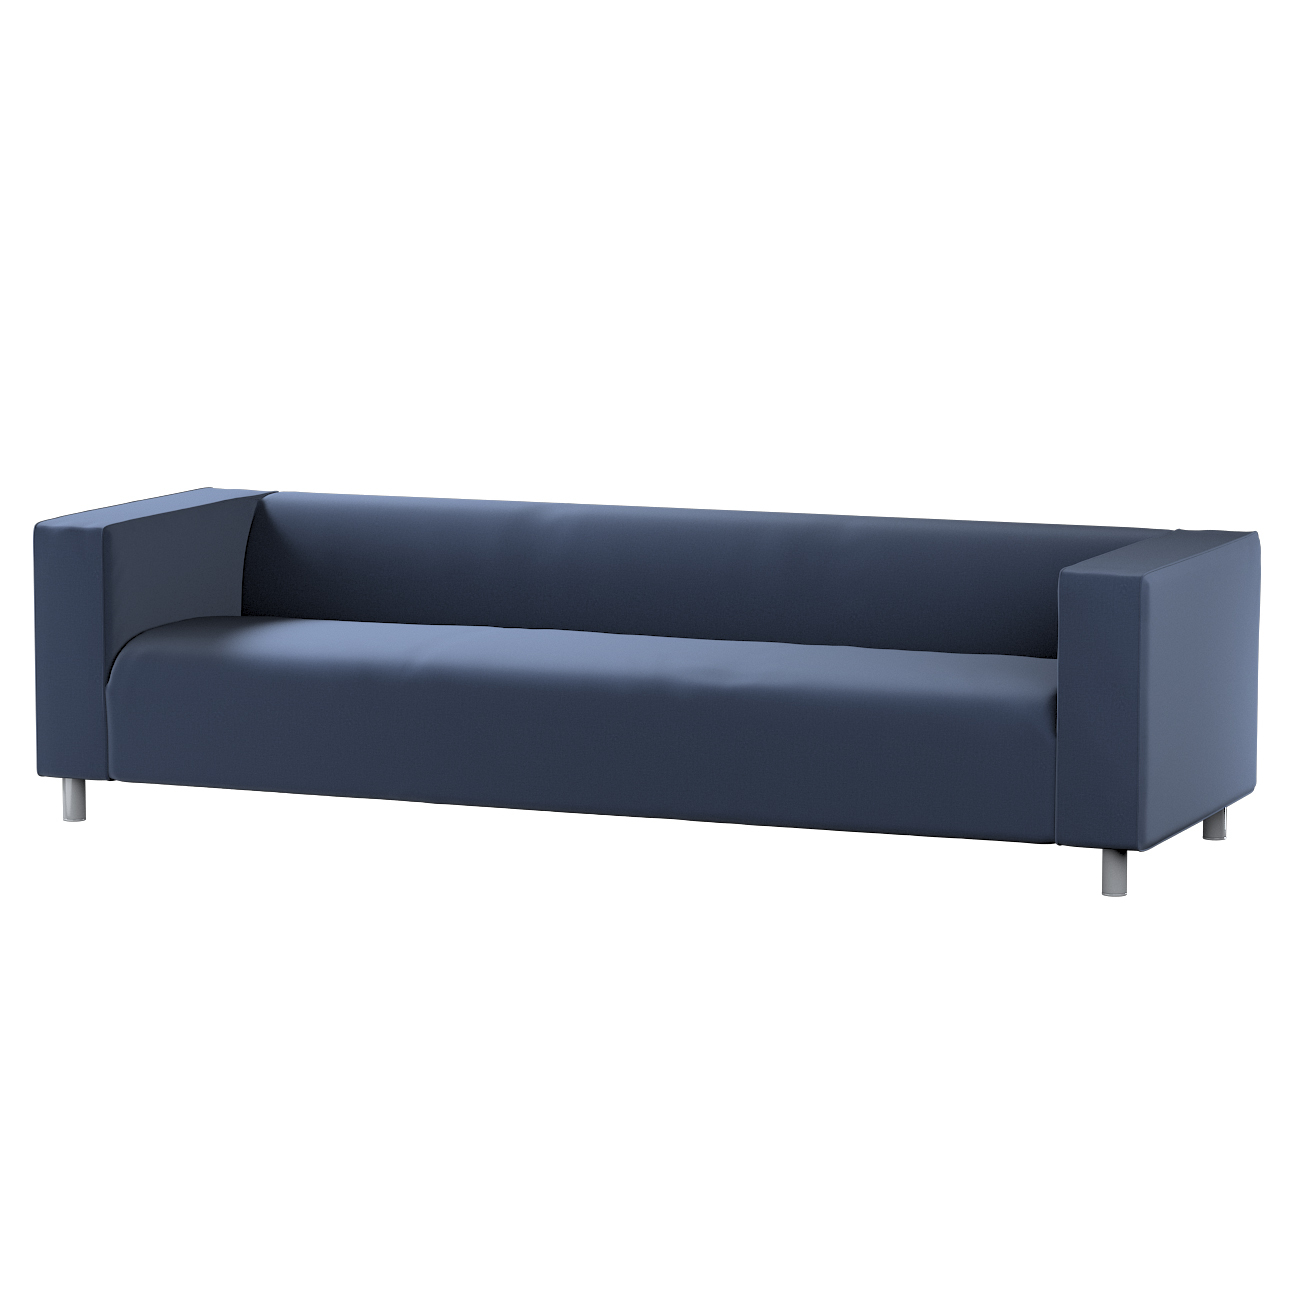 Bezug für Klippan 4-Sitzer Sofa, dunkelblau, Bezug für Klippan 4-Sitzer, In günstig online kaufen